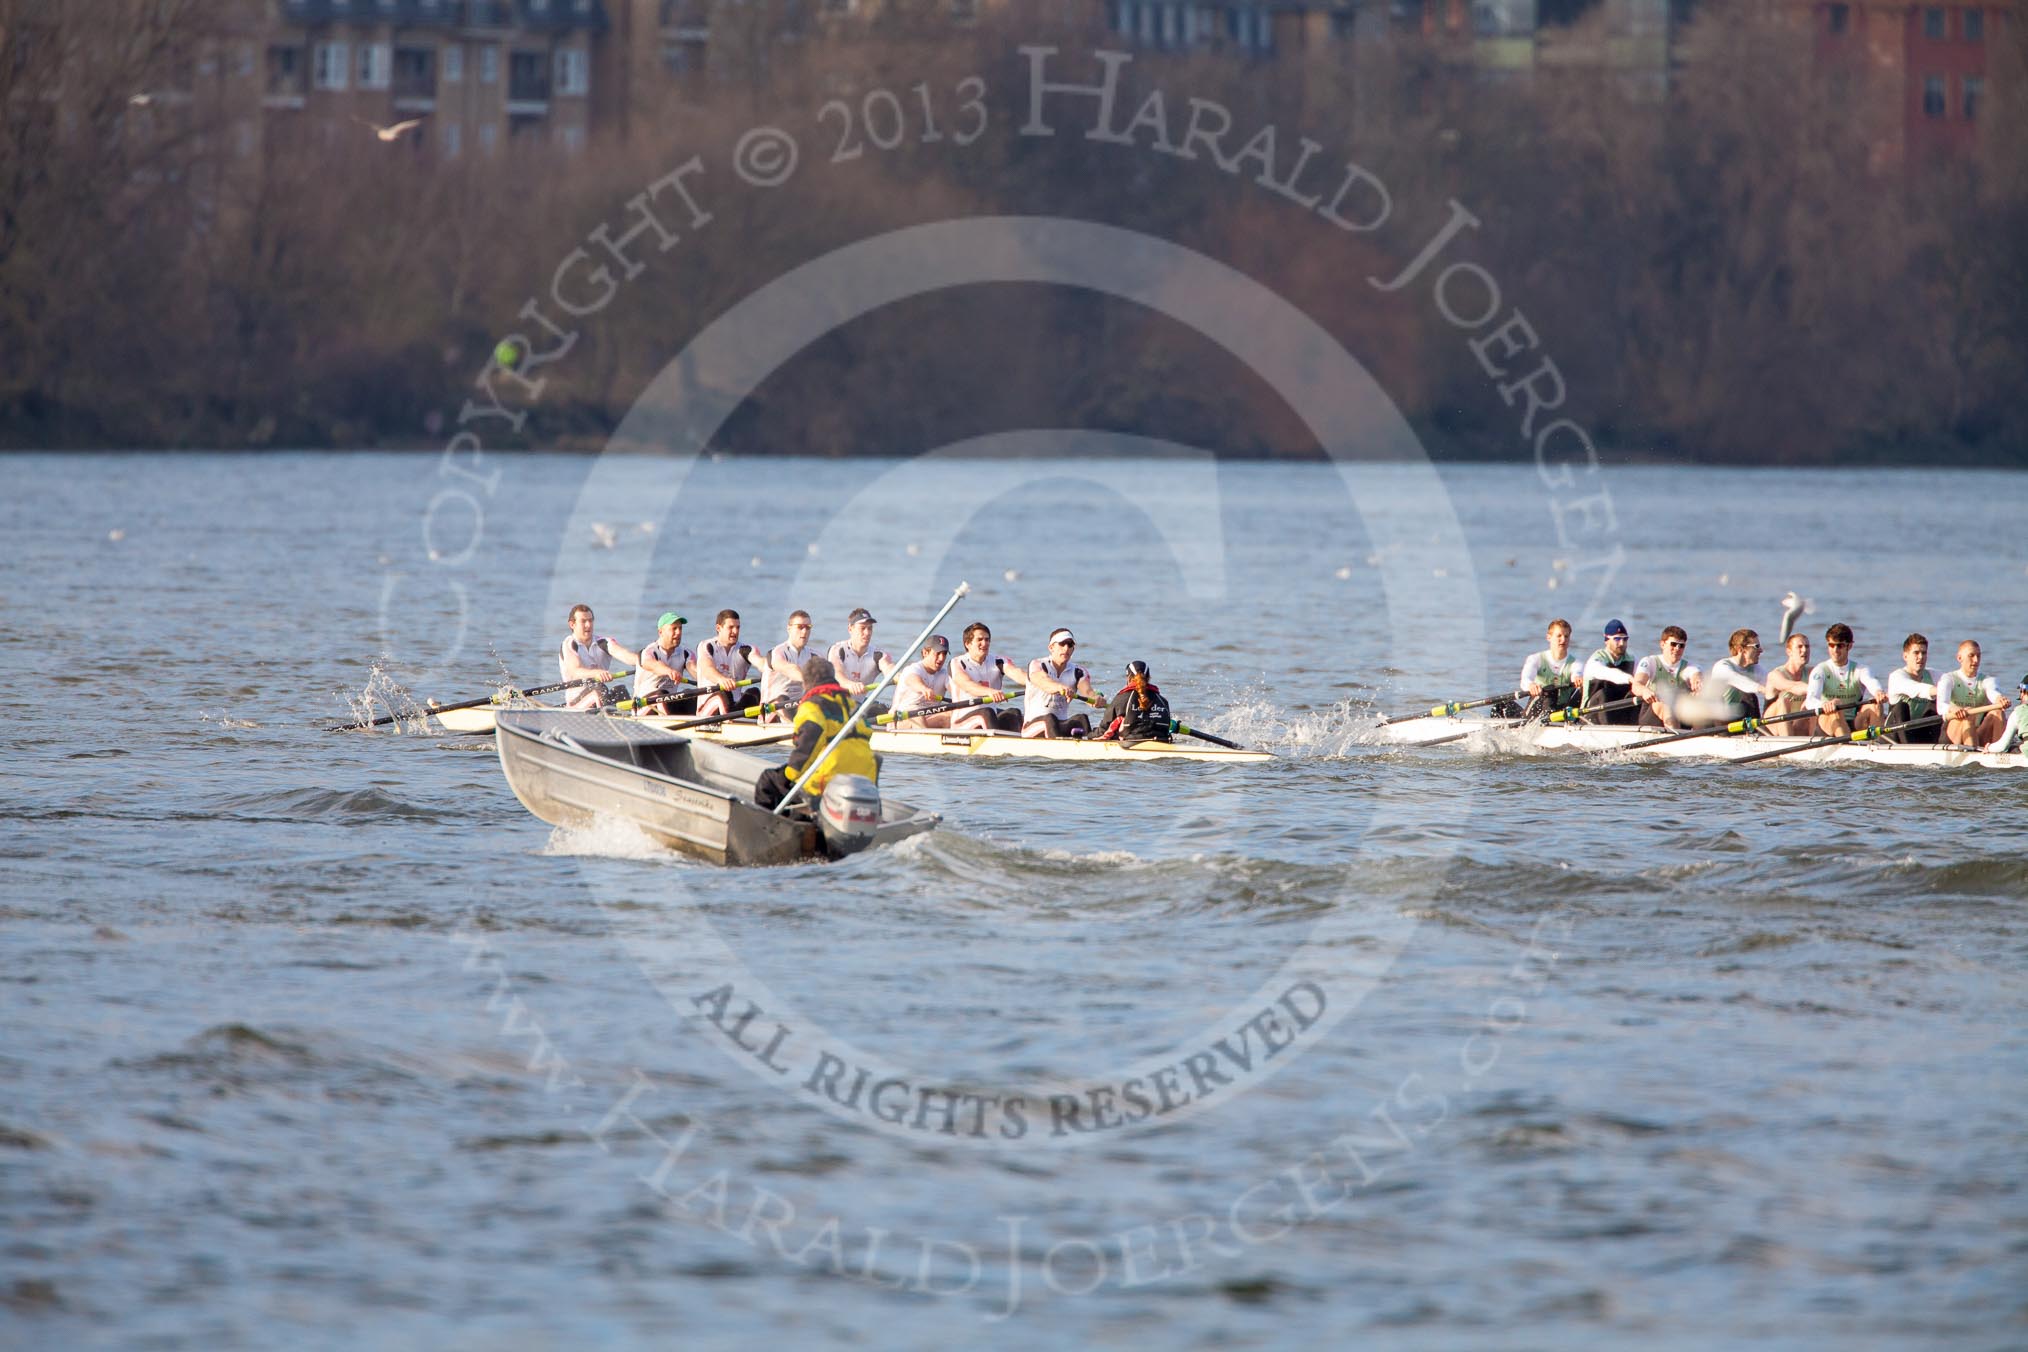 The Boat Race season 2013 - fixture CUBC vs Leander.
River Thames Tideway between Putney Bridge and Mortlake,
London SW15,

United Kingdom,
on 02 March 2013 at 15:58, image #146